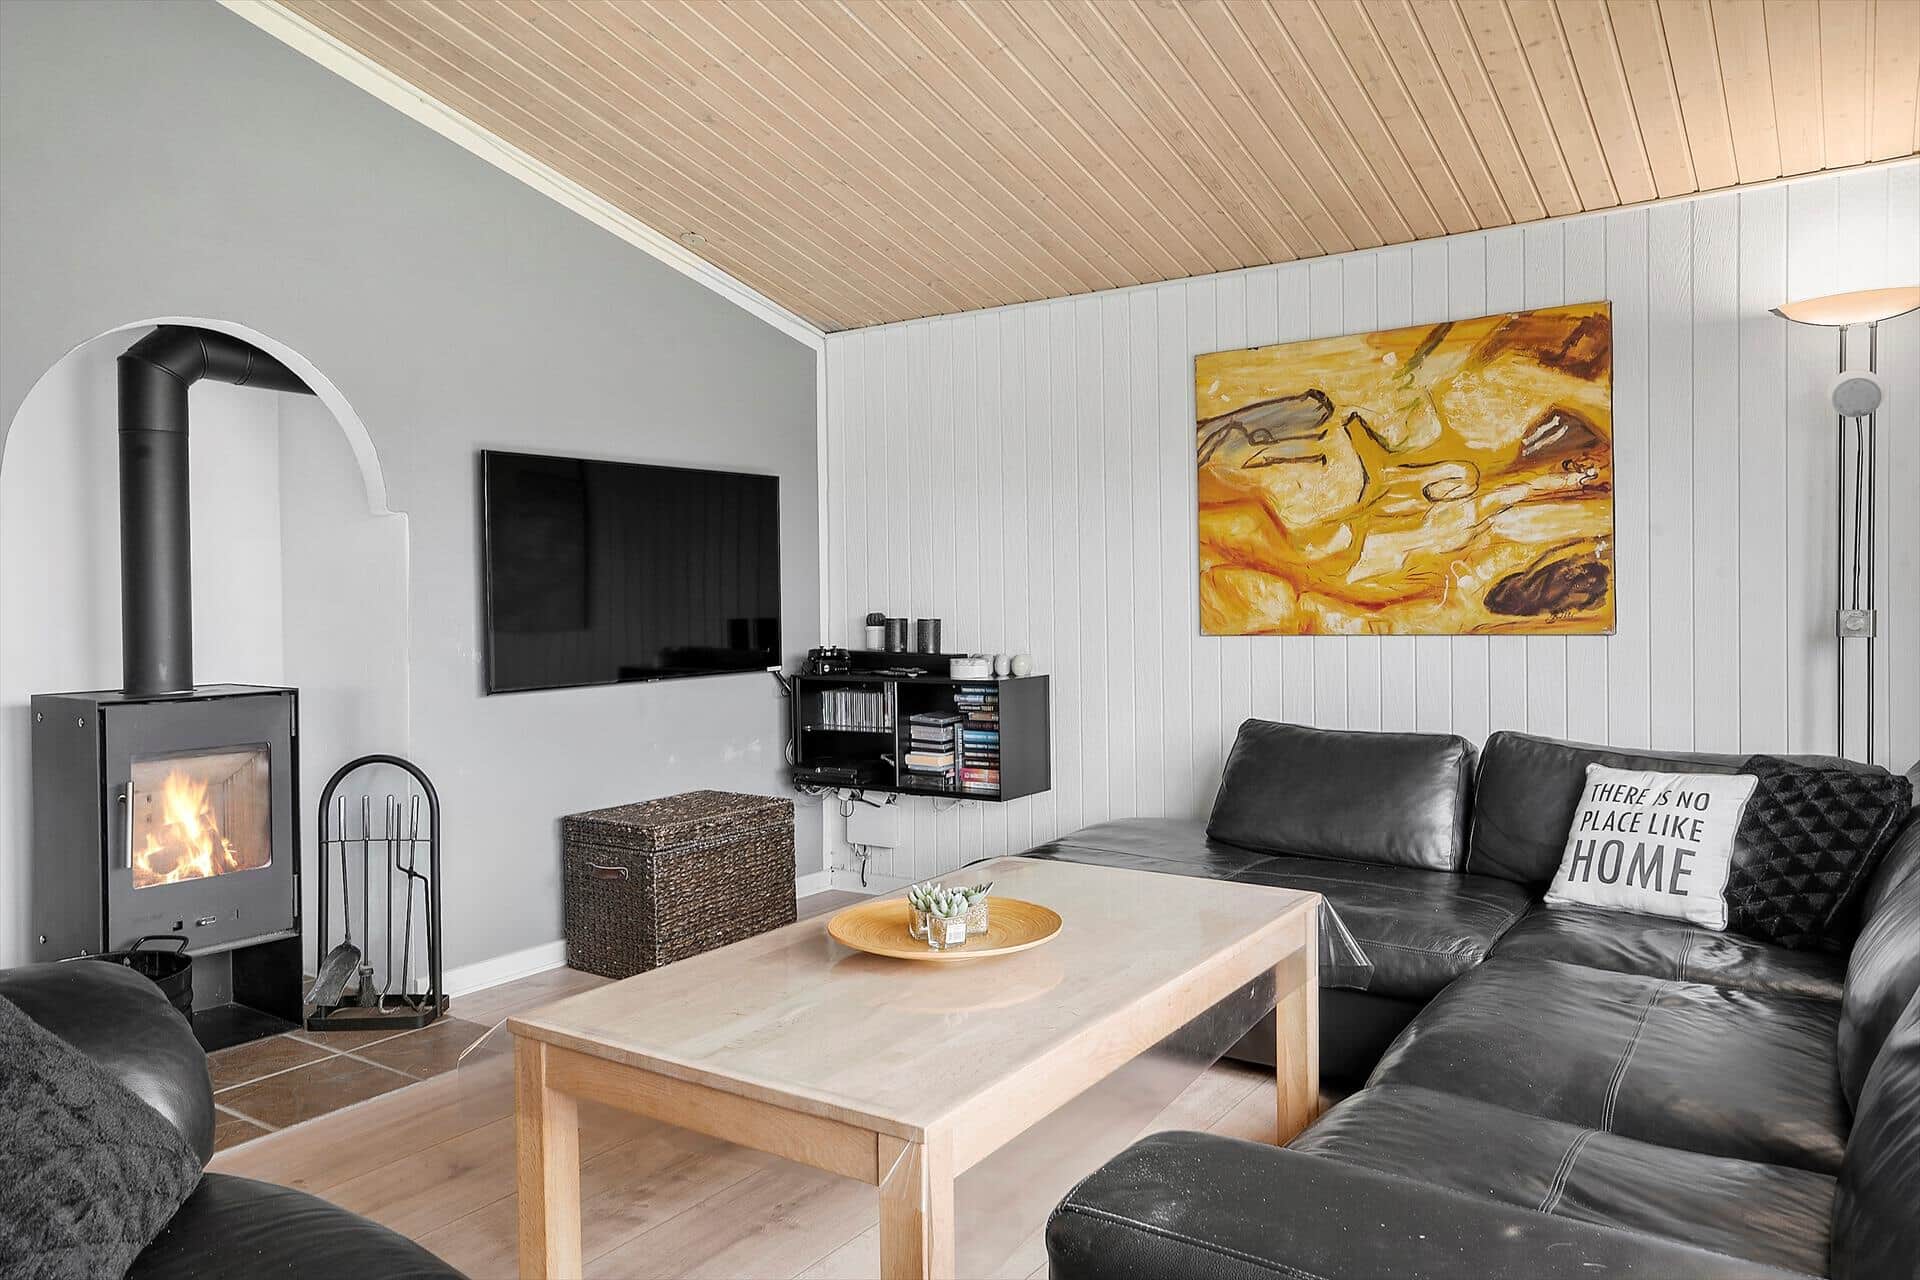 Livingroom 1 Image 3-19 Holiday-home 40514, Pøt Strandby 22, DK - 7130 Juelsminde